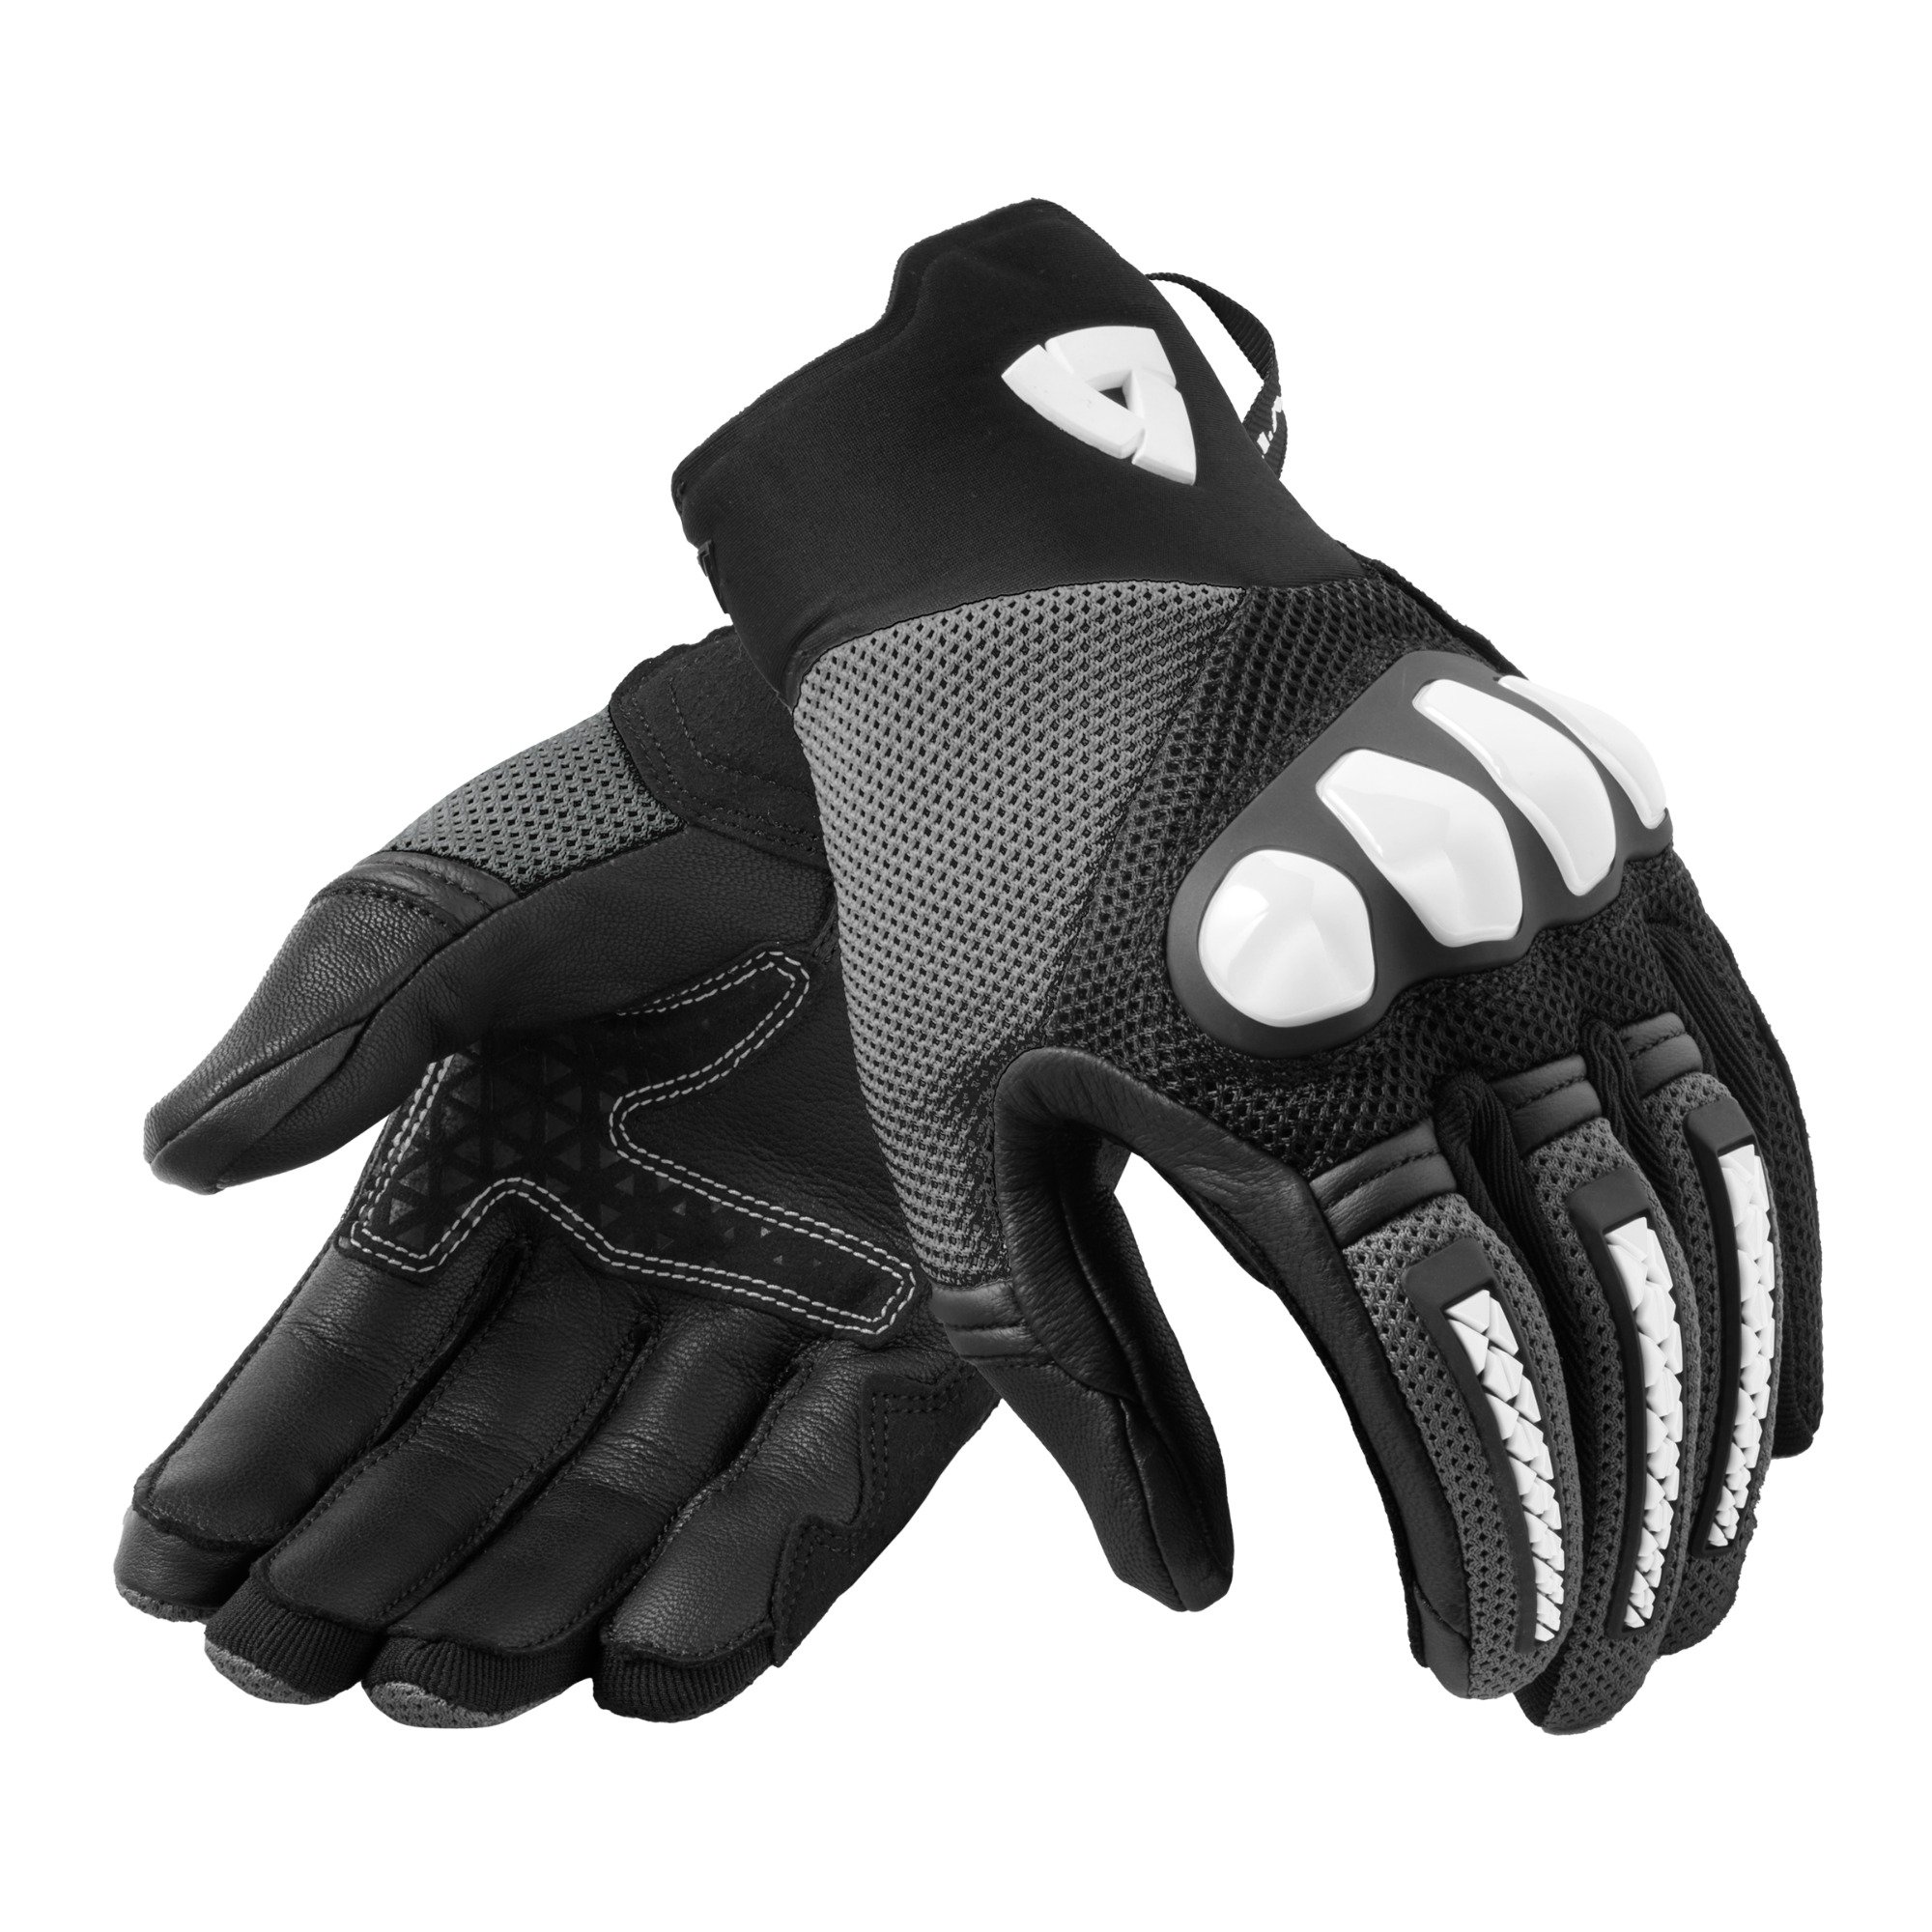 Image of REV'IT! Gloves Speedart Air Black White Size XL ID 8700001360883